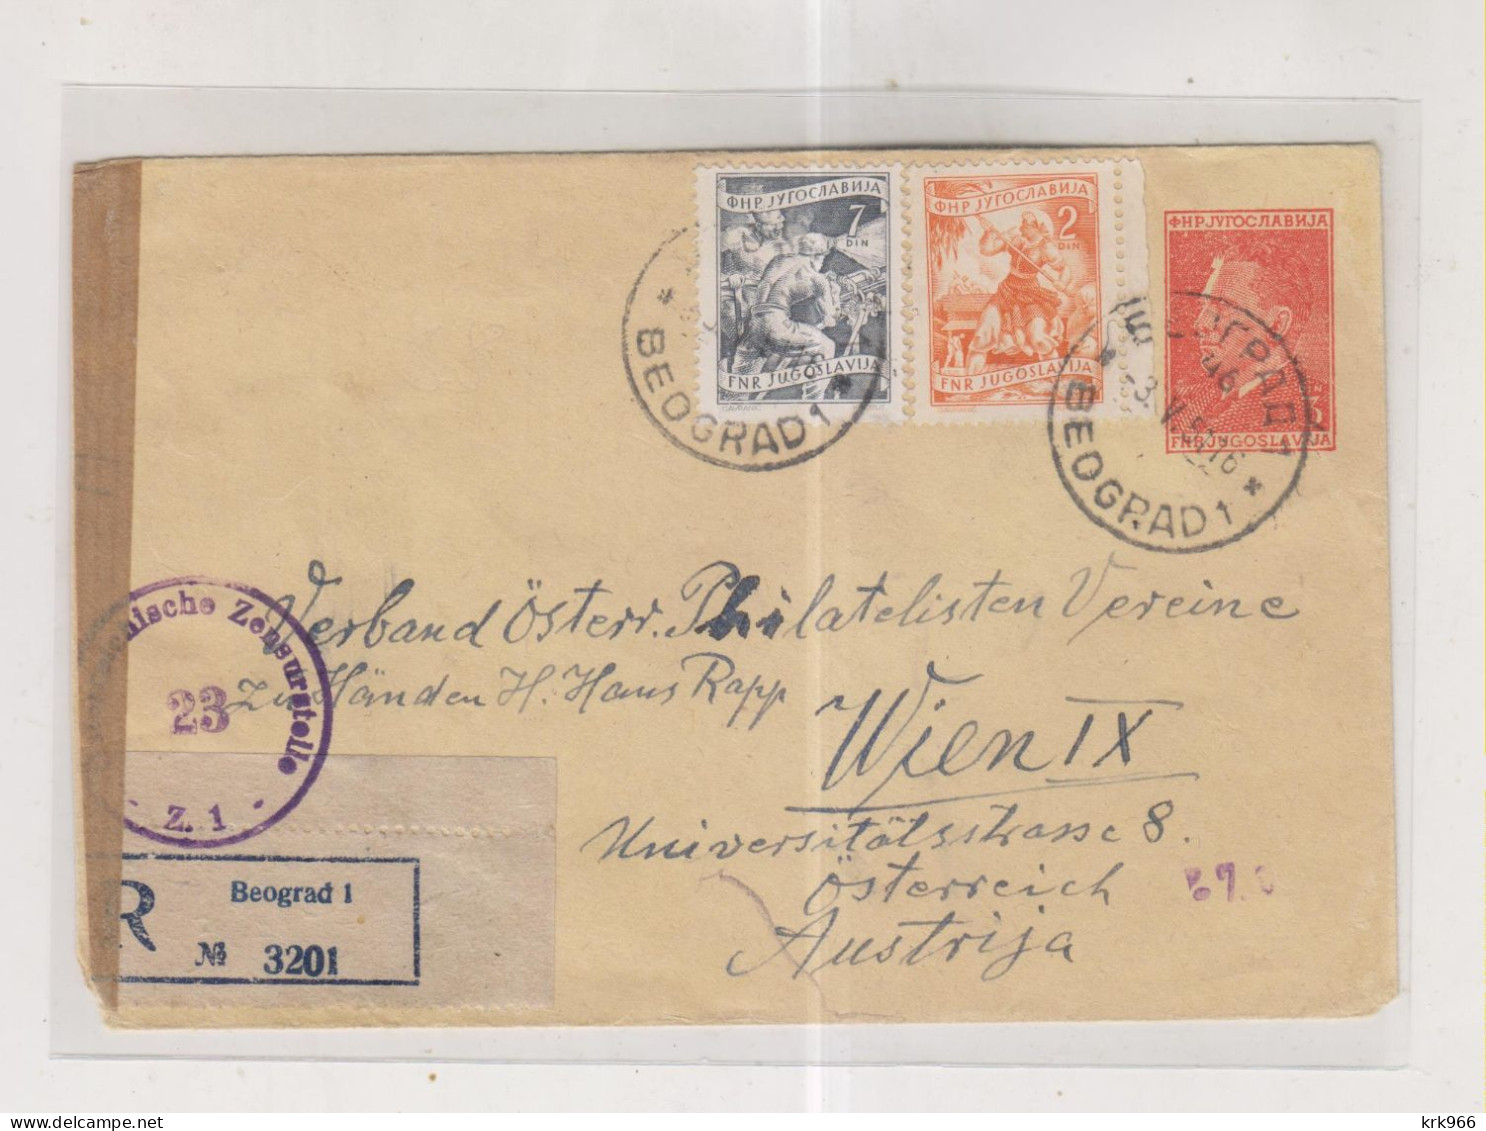 YUGOSLAVIA,1951 BEOGRAD registered  censored postal stationery cover to Austria